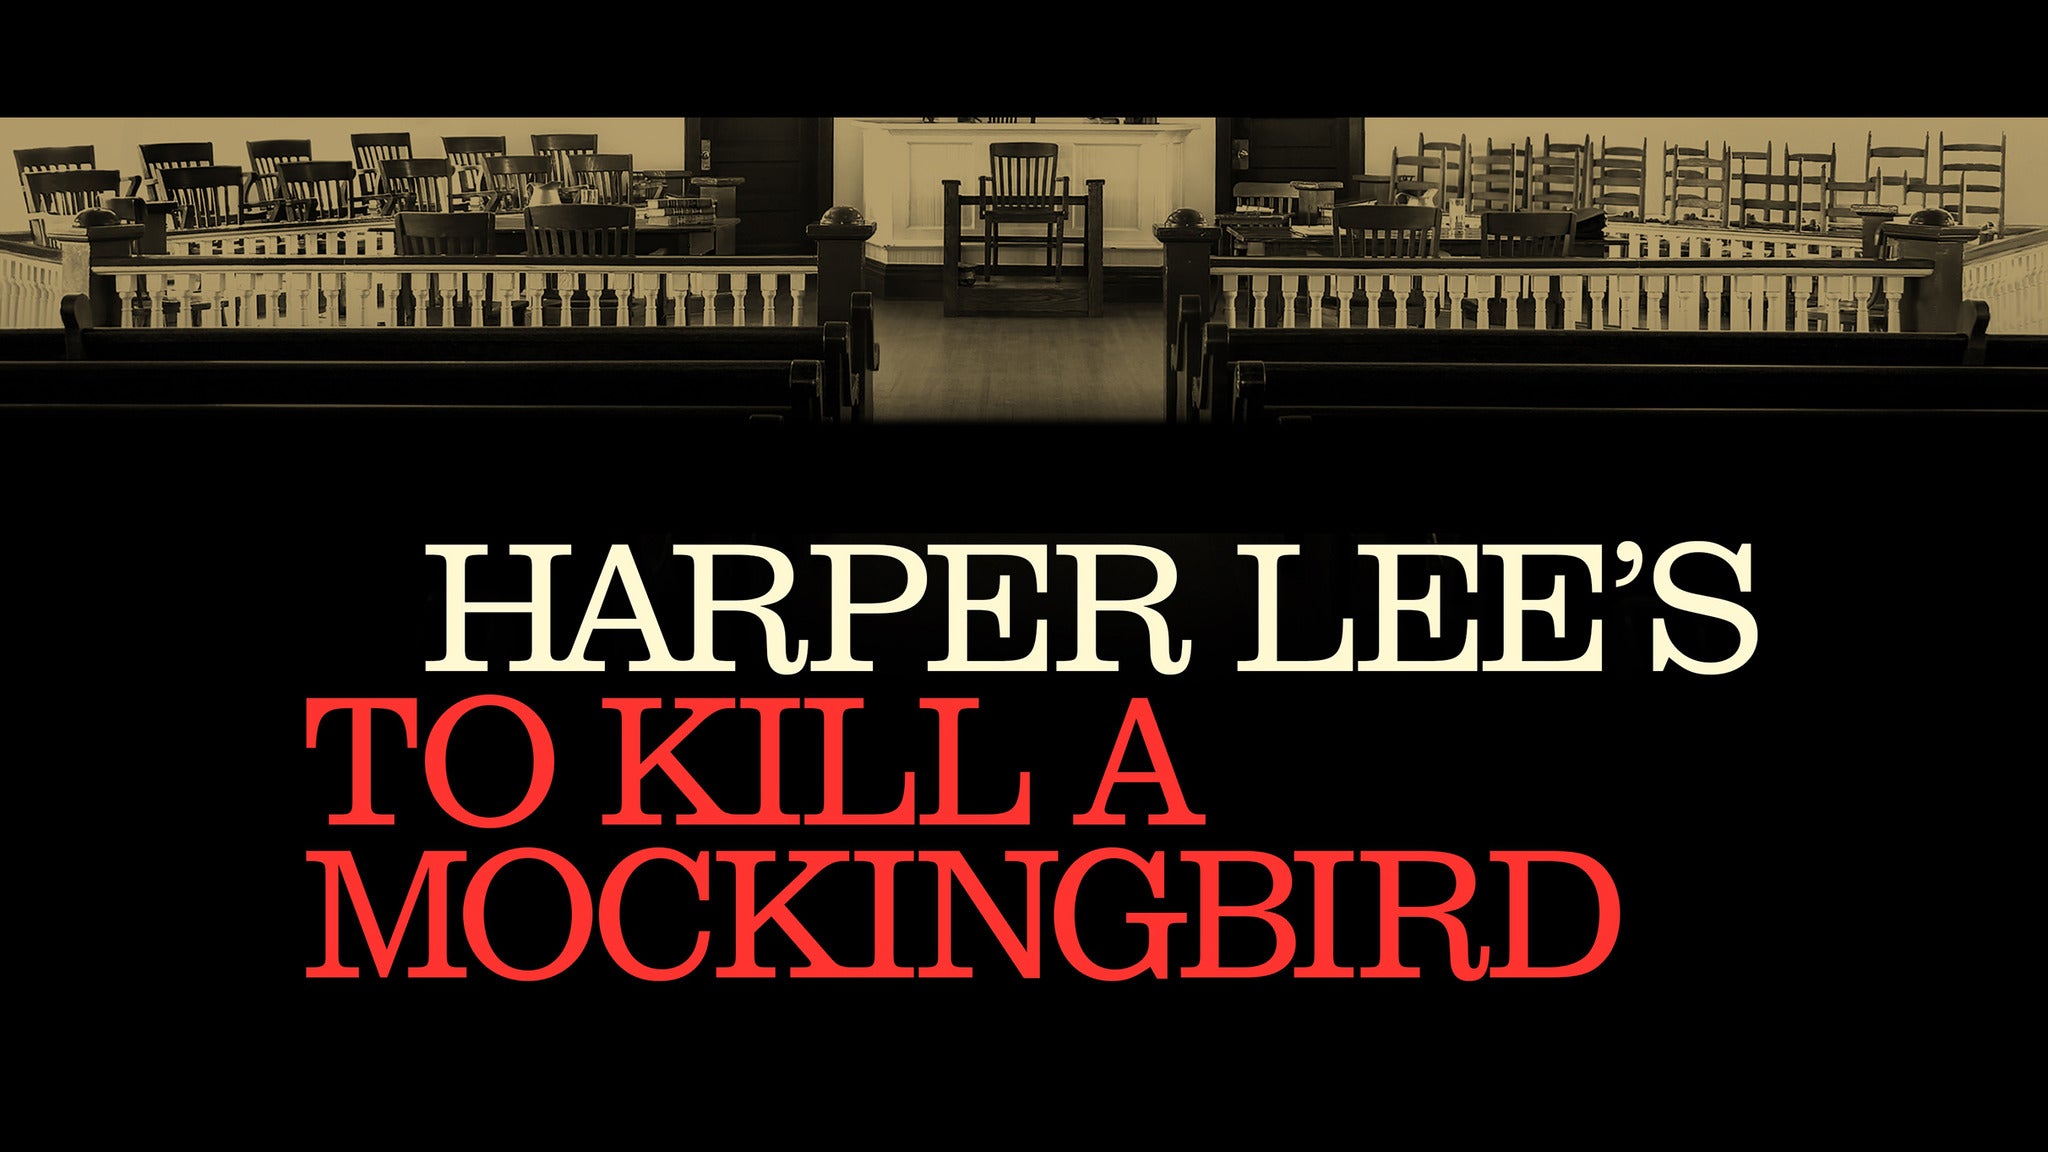 To Kill a Mockingbird (Touring) at Paramount Theatre - Seattle, WA 98101